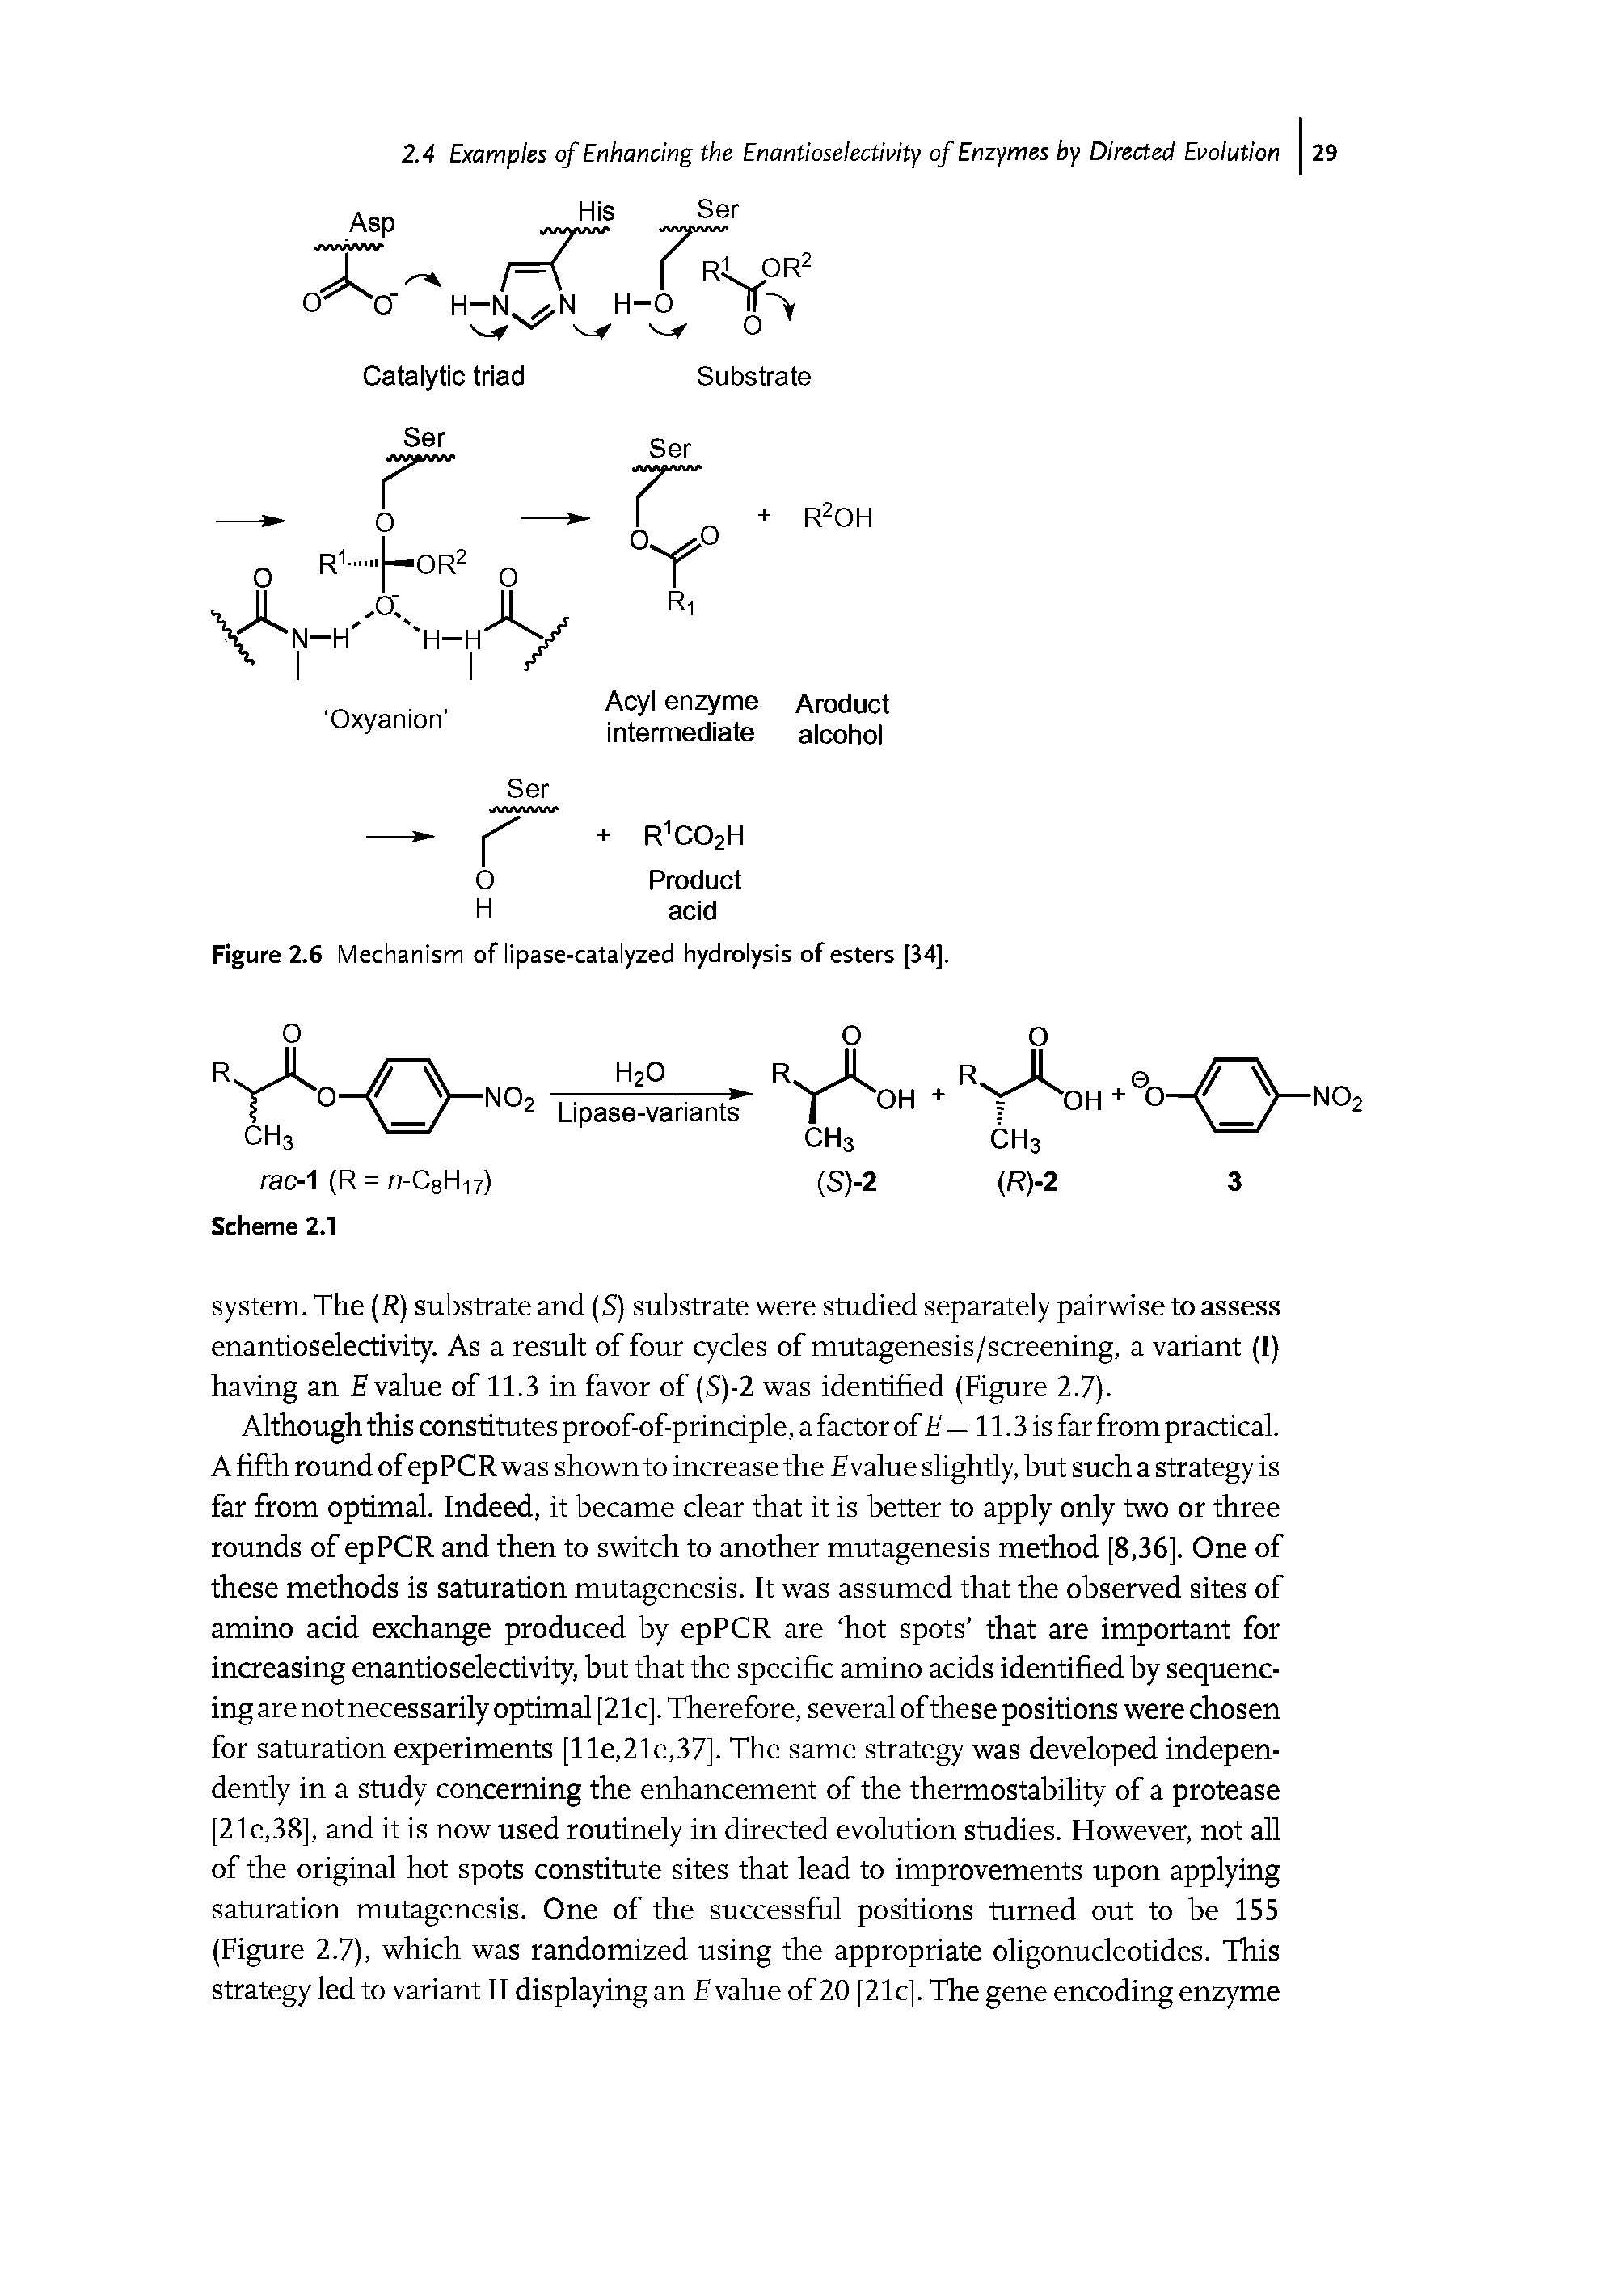 Figure 2.6 Mechanism of lipase-catalyzed hydrolysis of esters [34].